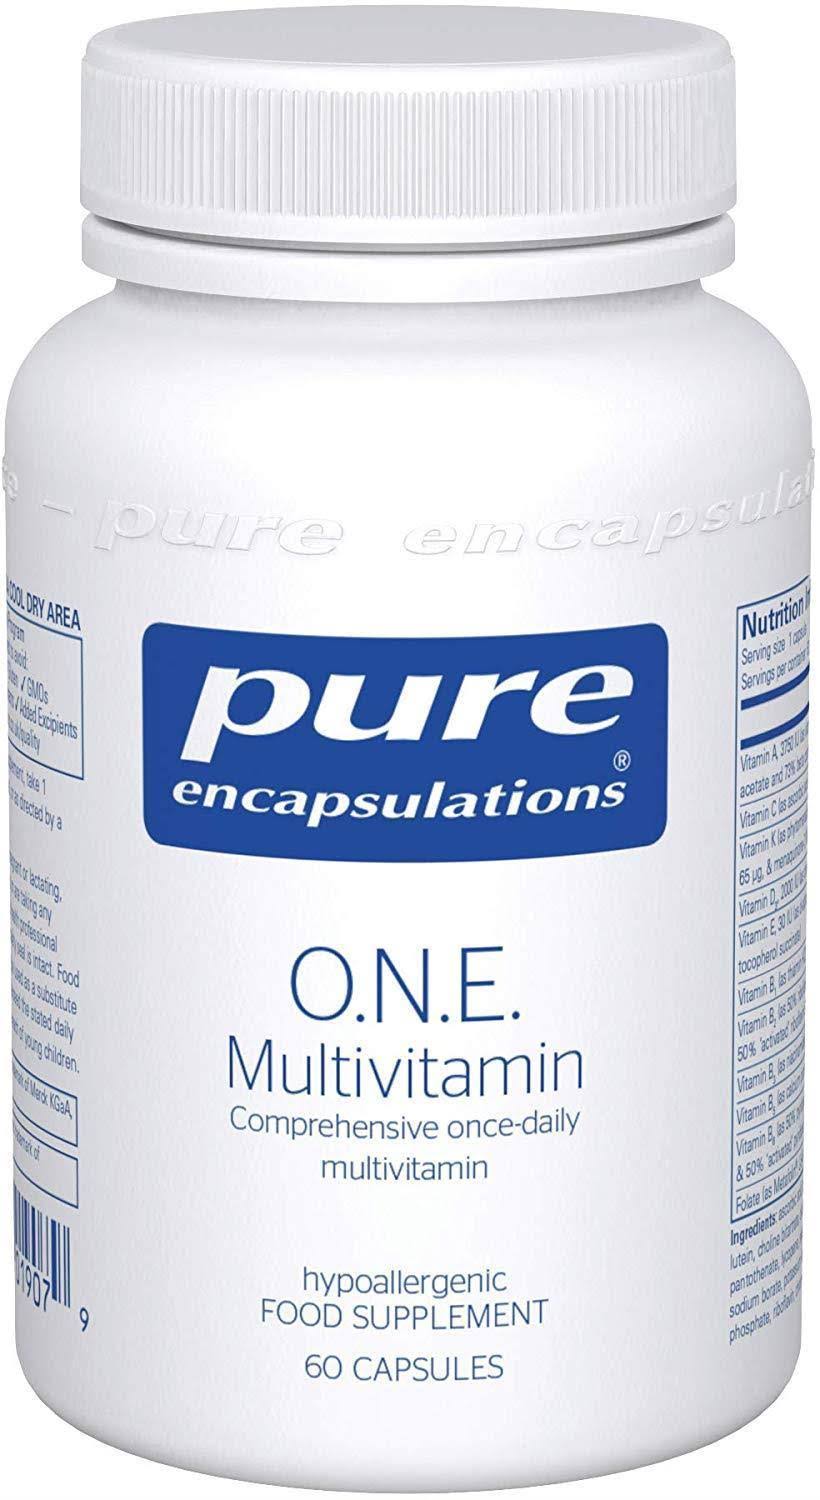 Pure Encapsulations O.N.E. Multivitamin with Metafolin L-5 MTHF - 60 Capsules